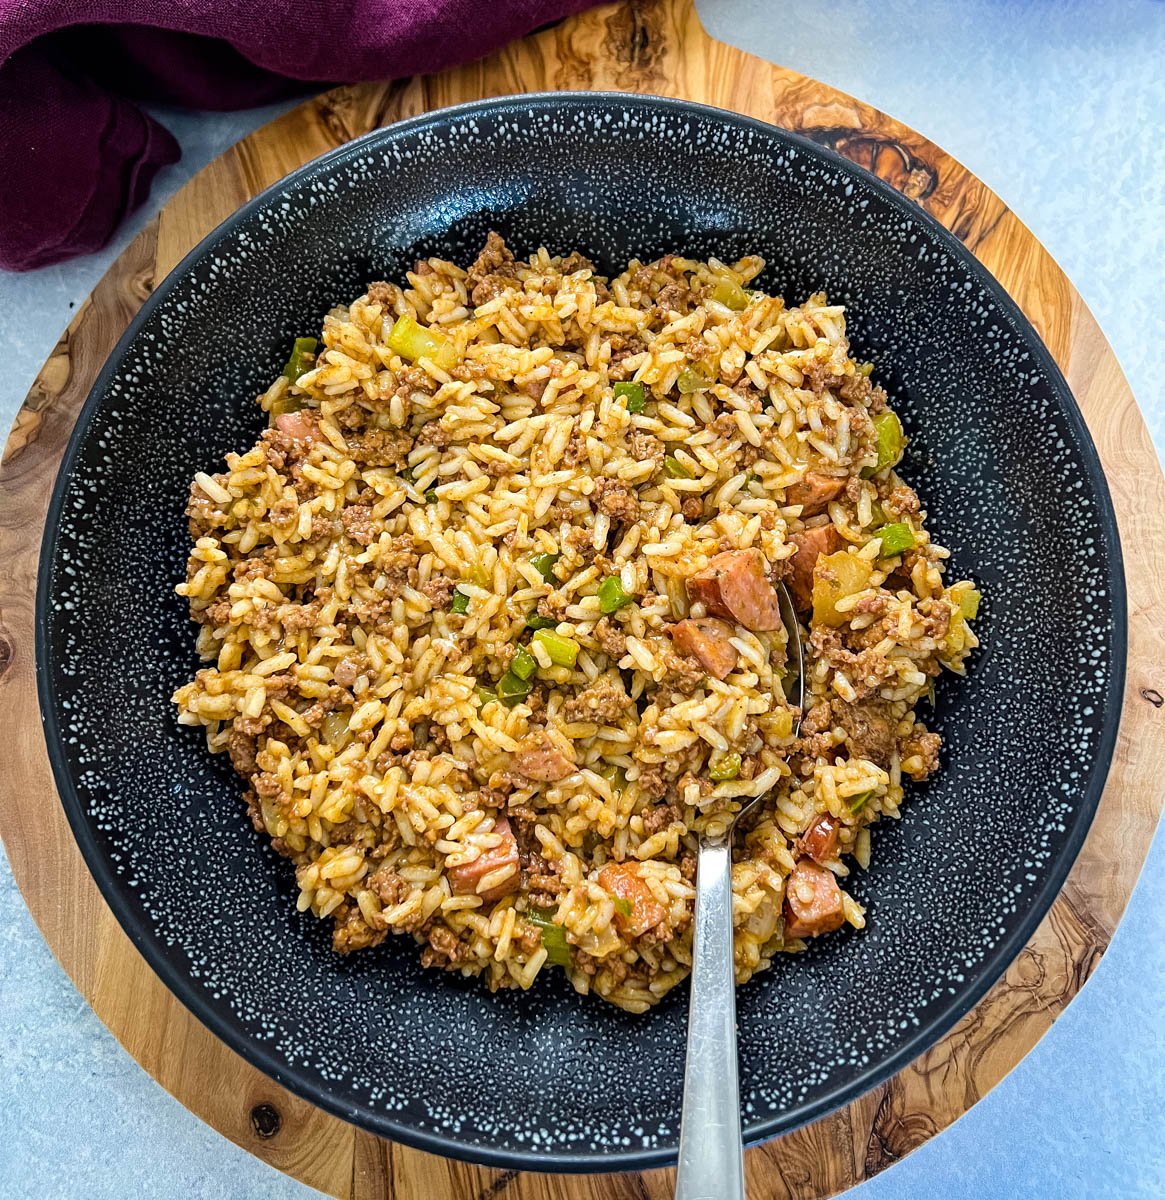 https://www.staysnatched.com/wp-content/uploads/2022/10/Cajun-dirty-rice-recipe-1-1.jpg